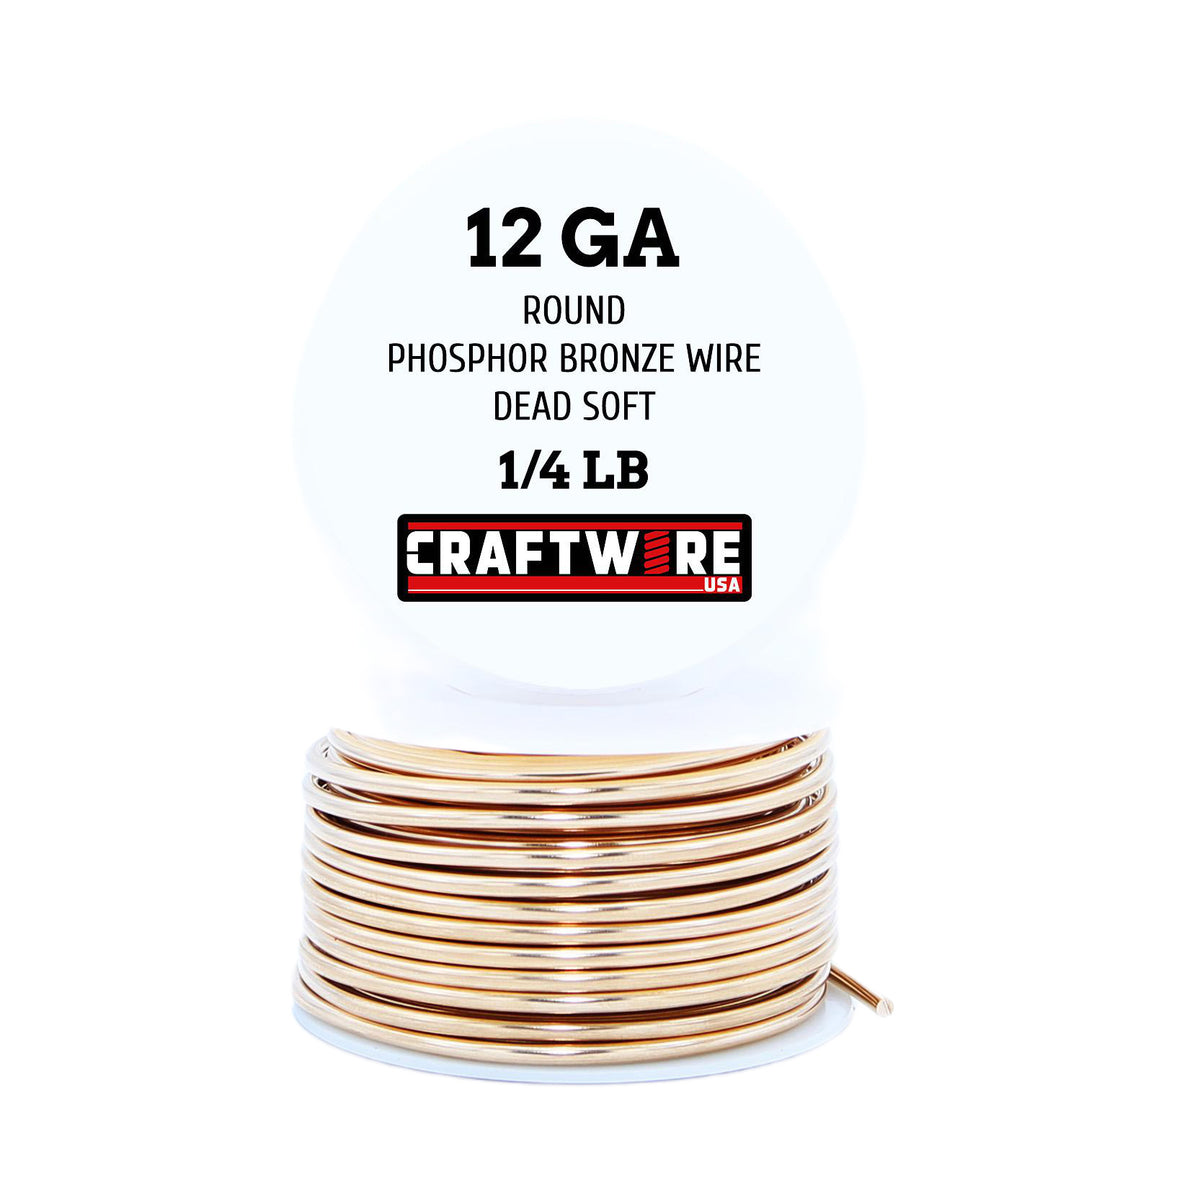  Craftwire USA Solid Bare Bronze Wire Round Selection, Dead  Soft, 1 LB, 12 Gauge,Bronze 1 LB - 12 GA. : Industrial & Scientific